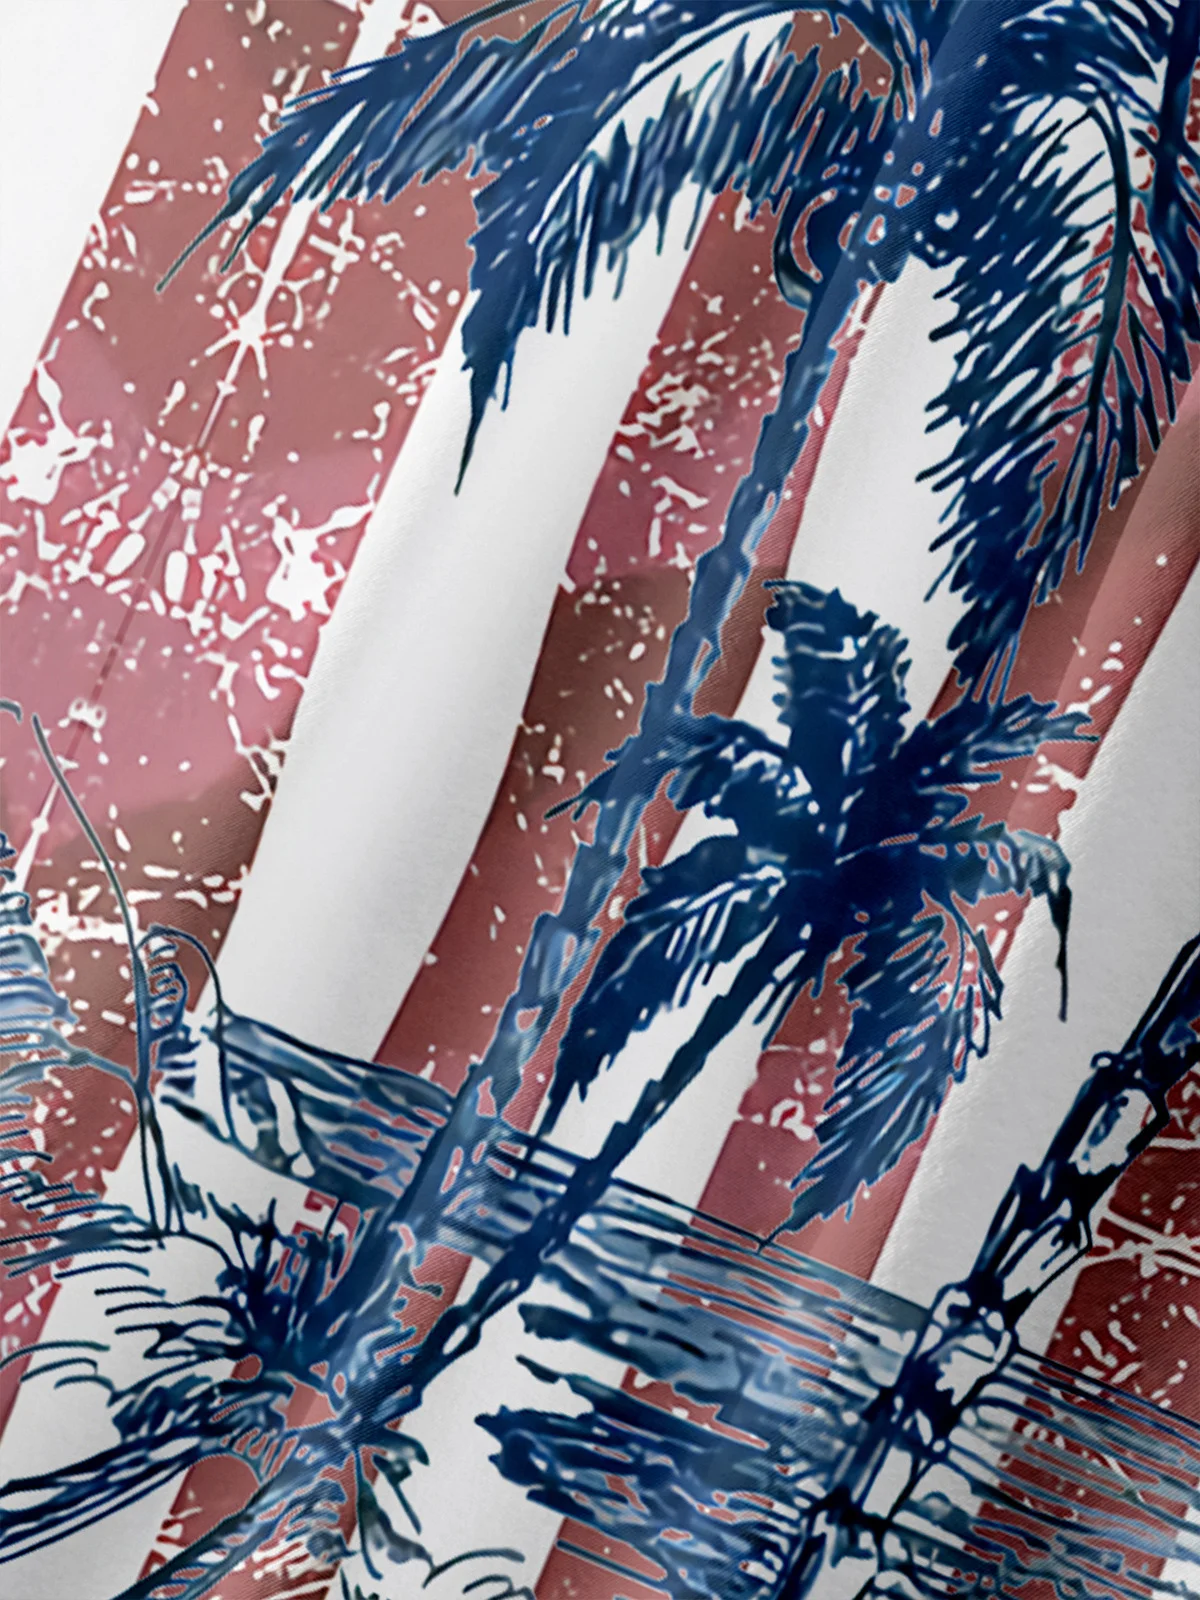 Hardaddy American Flag Coconut Tree Chest Pocket Short Sleeve Hawaiian Shirt